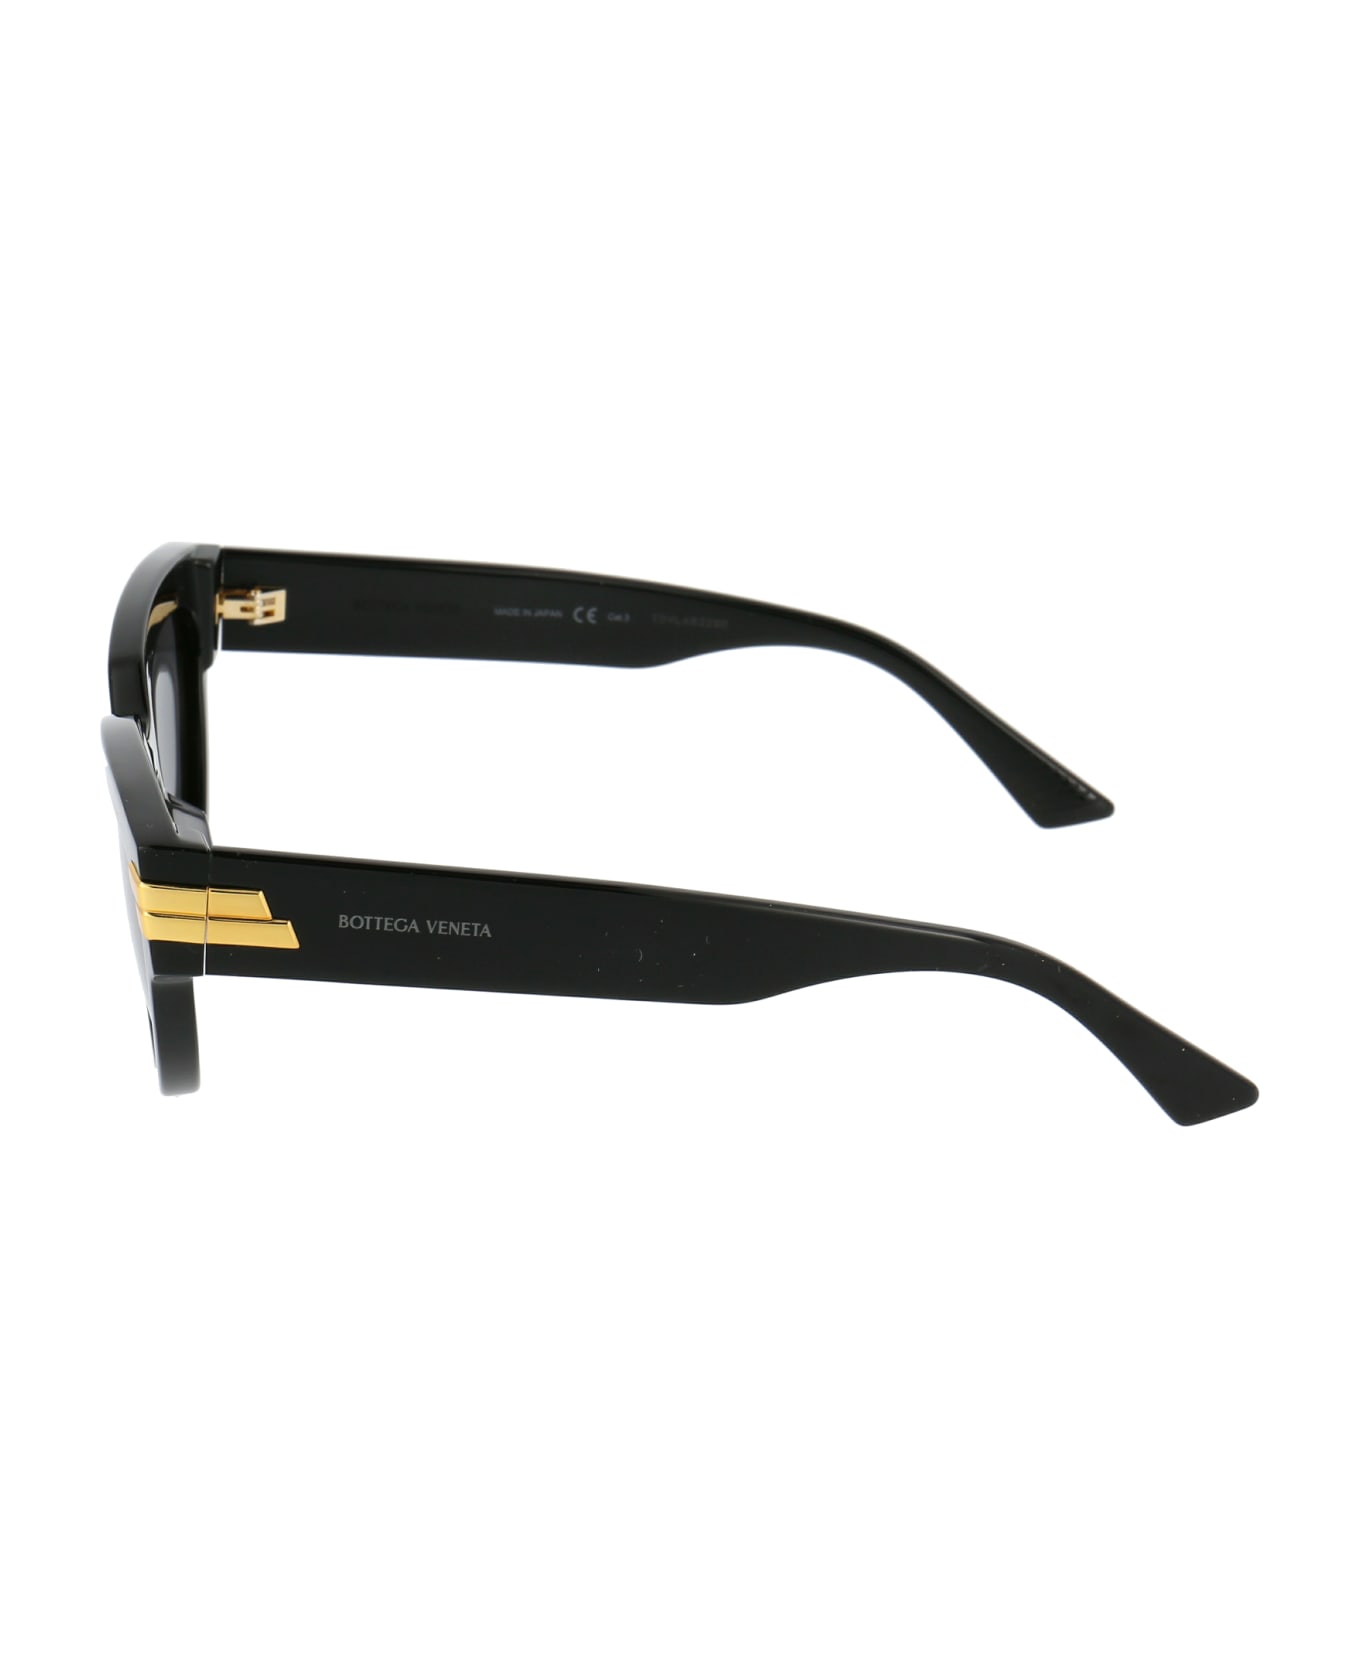 Bottega Veneta Eyewear Bv1035s Sunglasses - 001 BLACK BLACK GREY